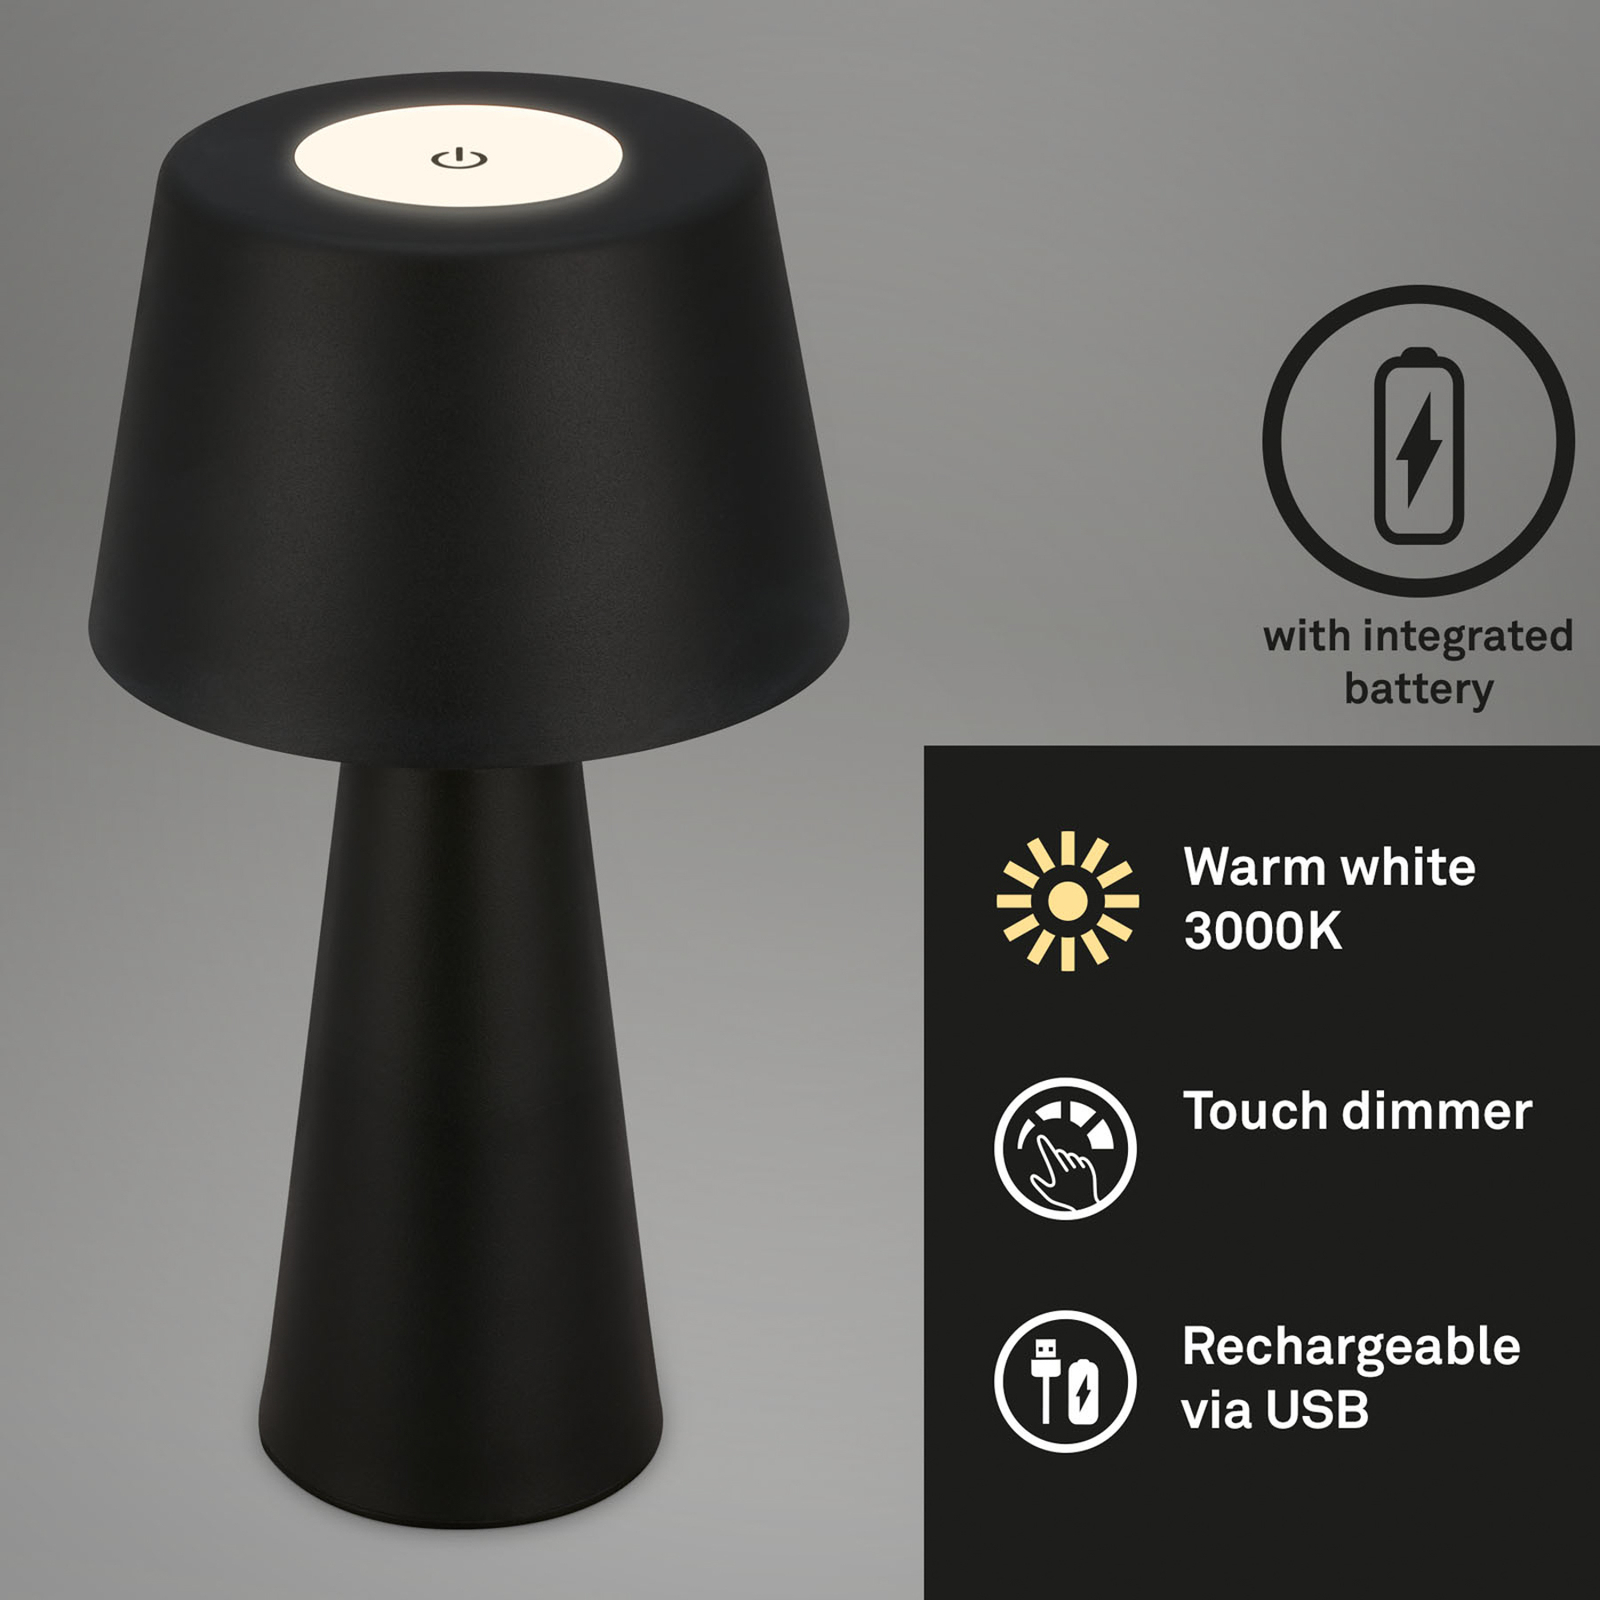 LED tafellamp Kihi met oplaadbare accu, zwart